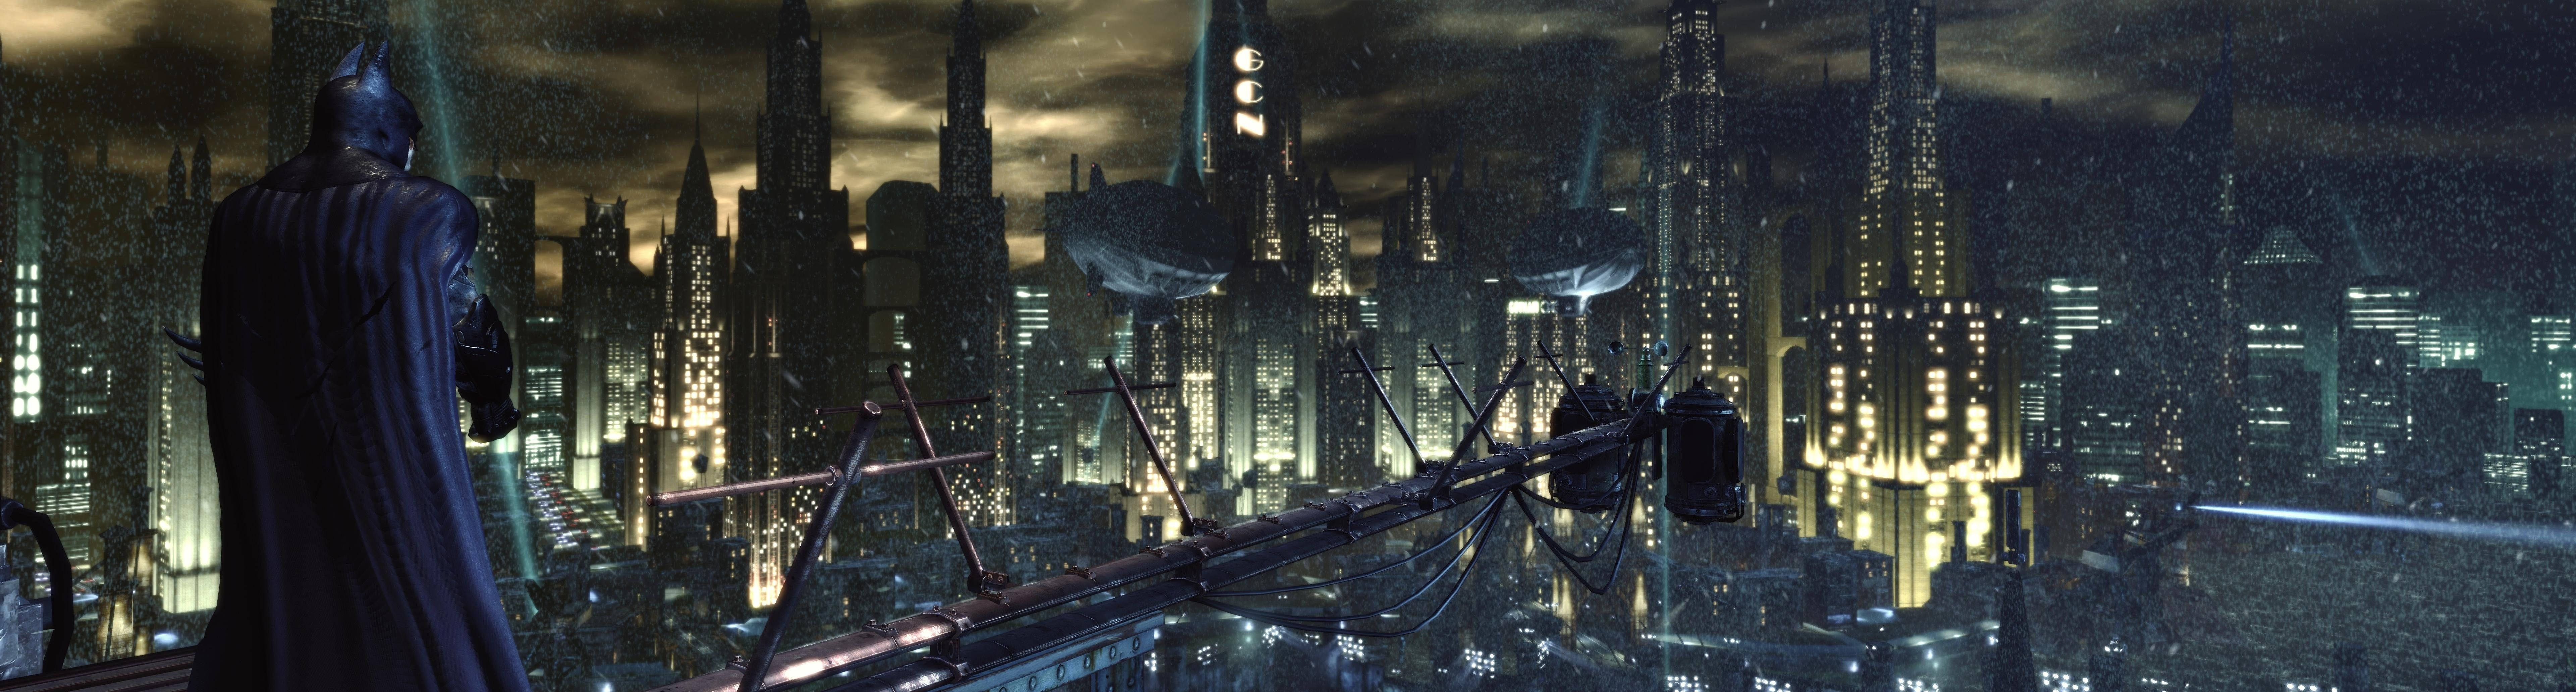 4k Dual Monitor Batman Overlooking Gotham City